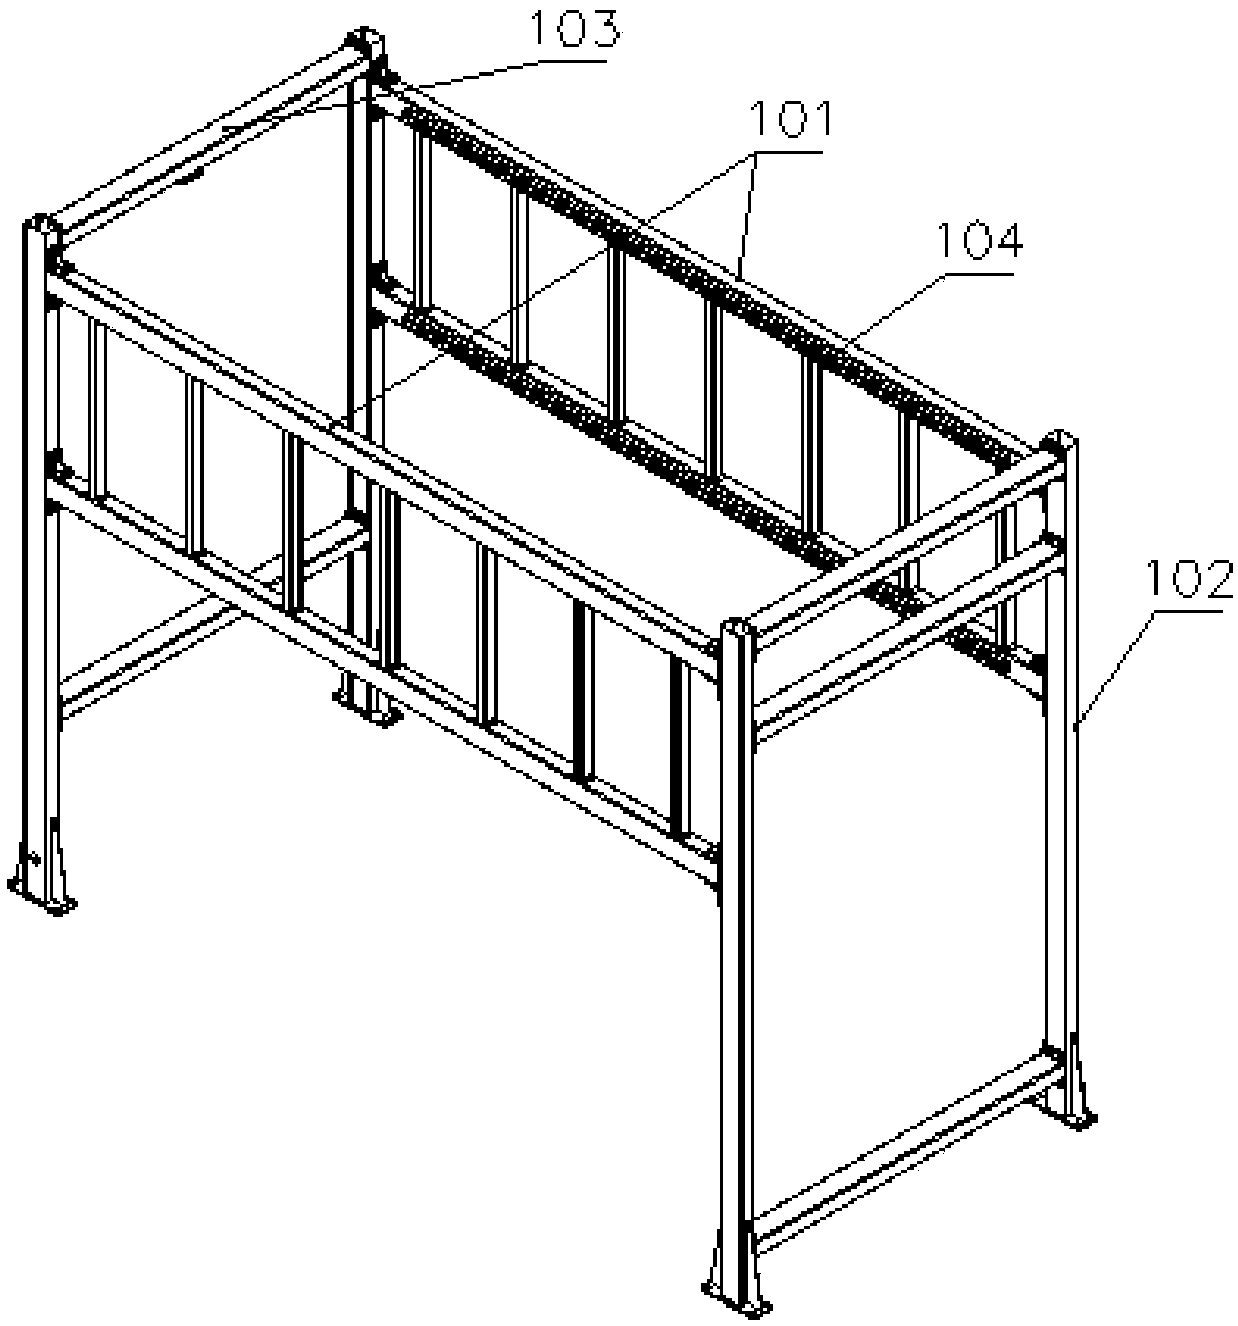 A refrigerator vertical box transfer machine